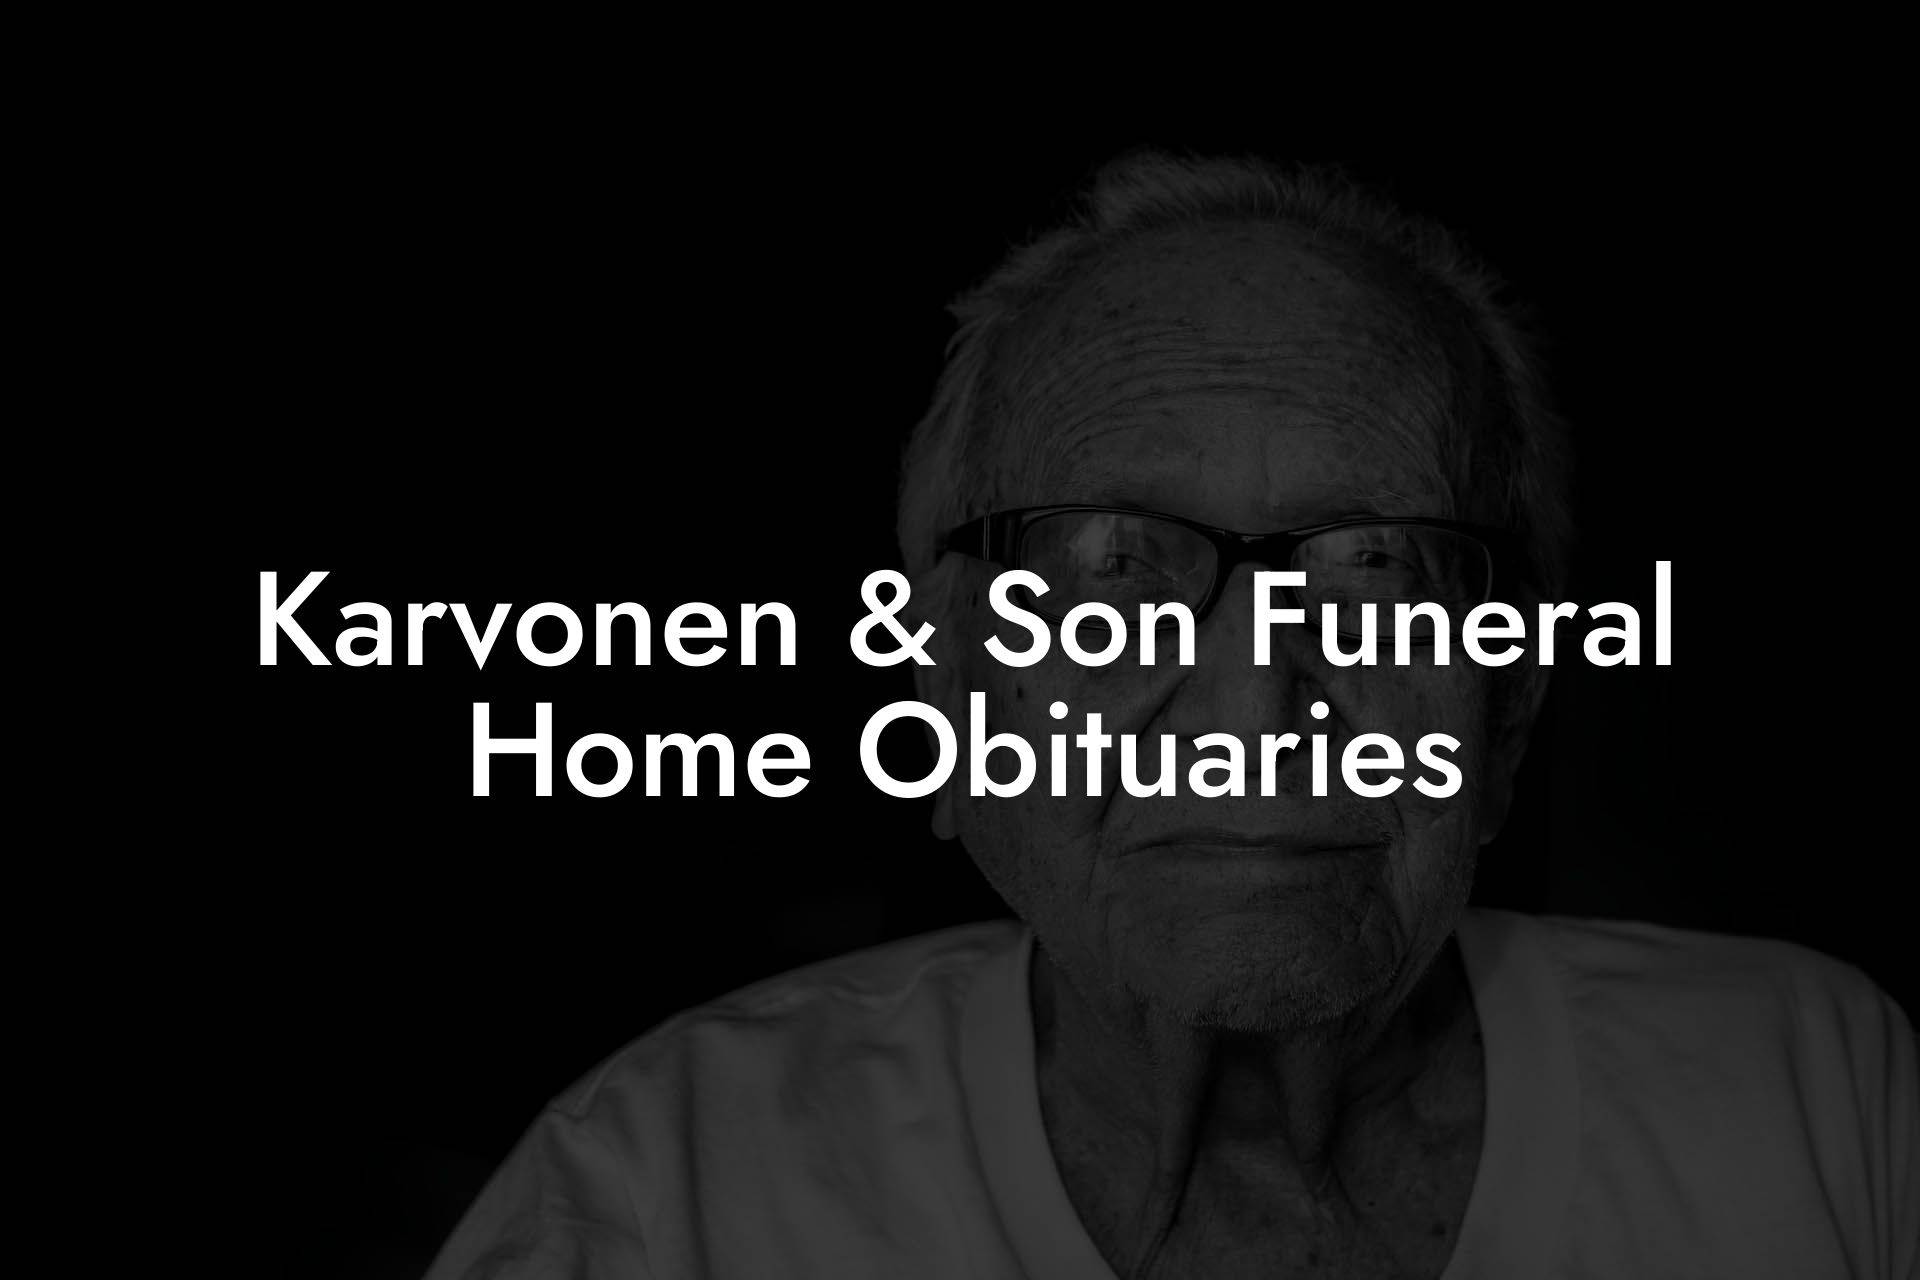 Karvonen & Son Funeral Home Obituaries